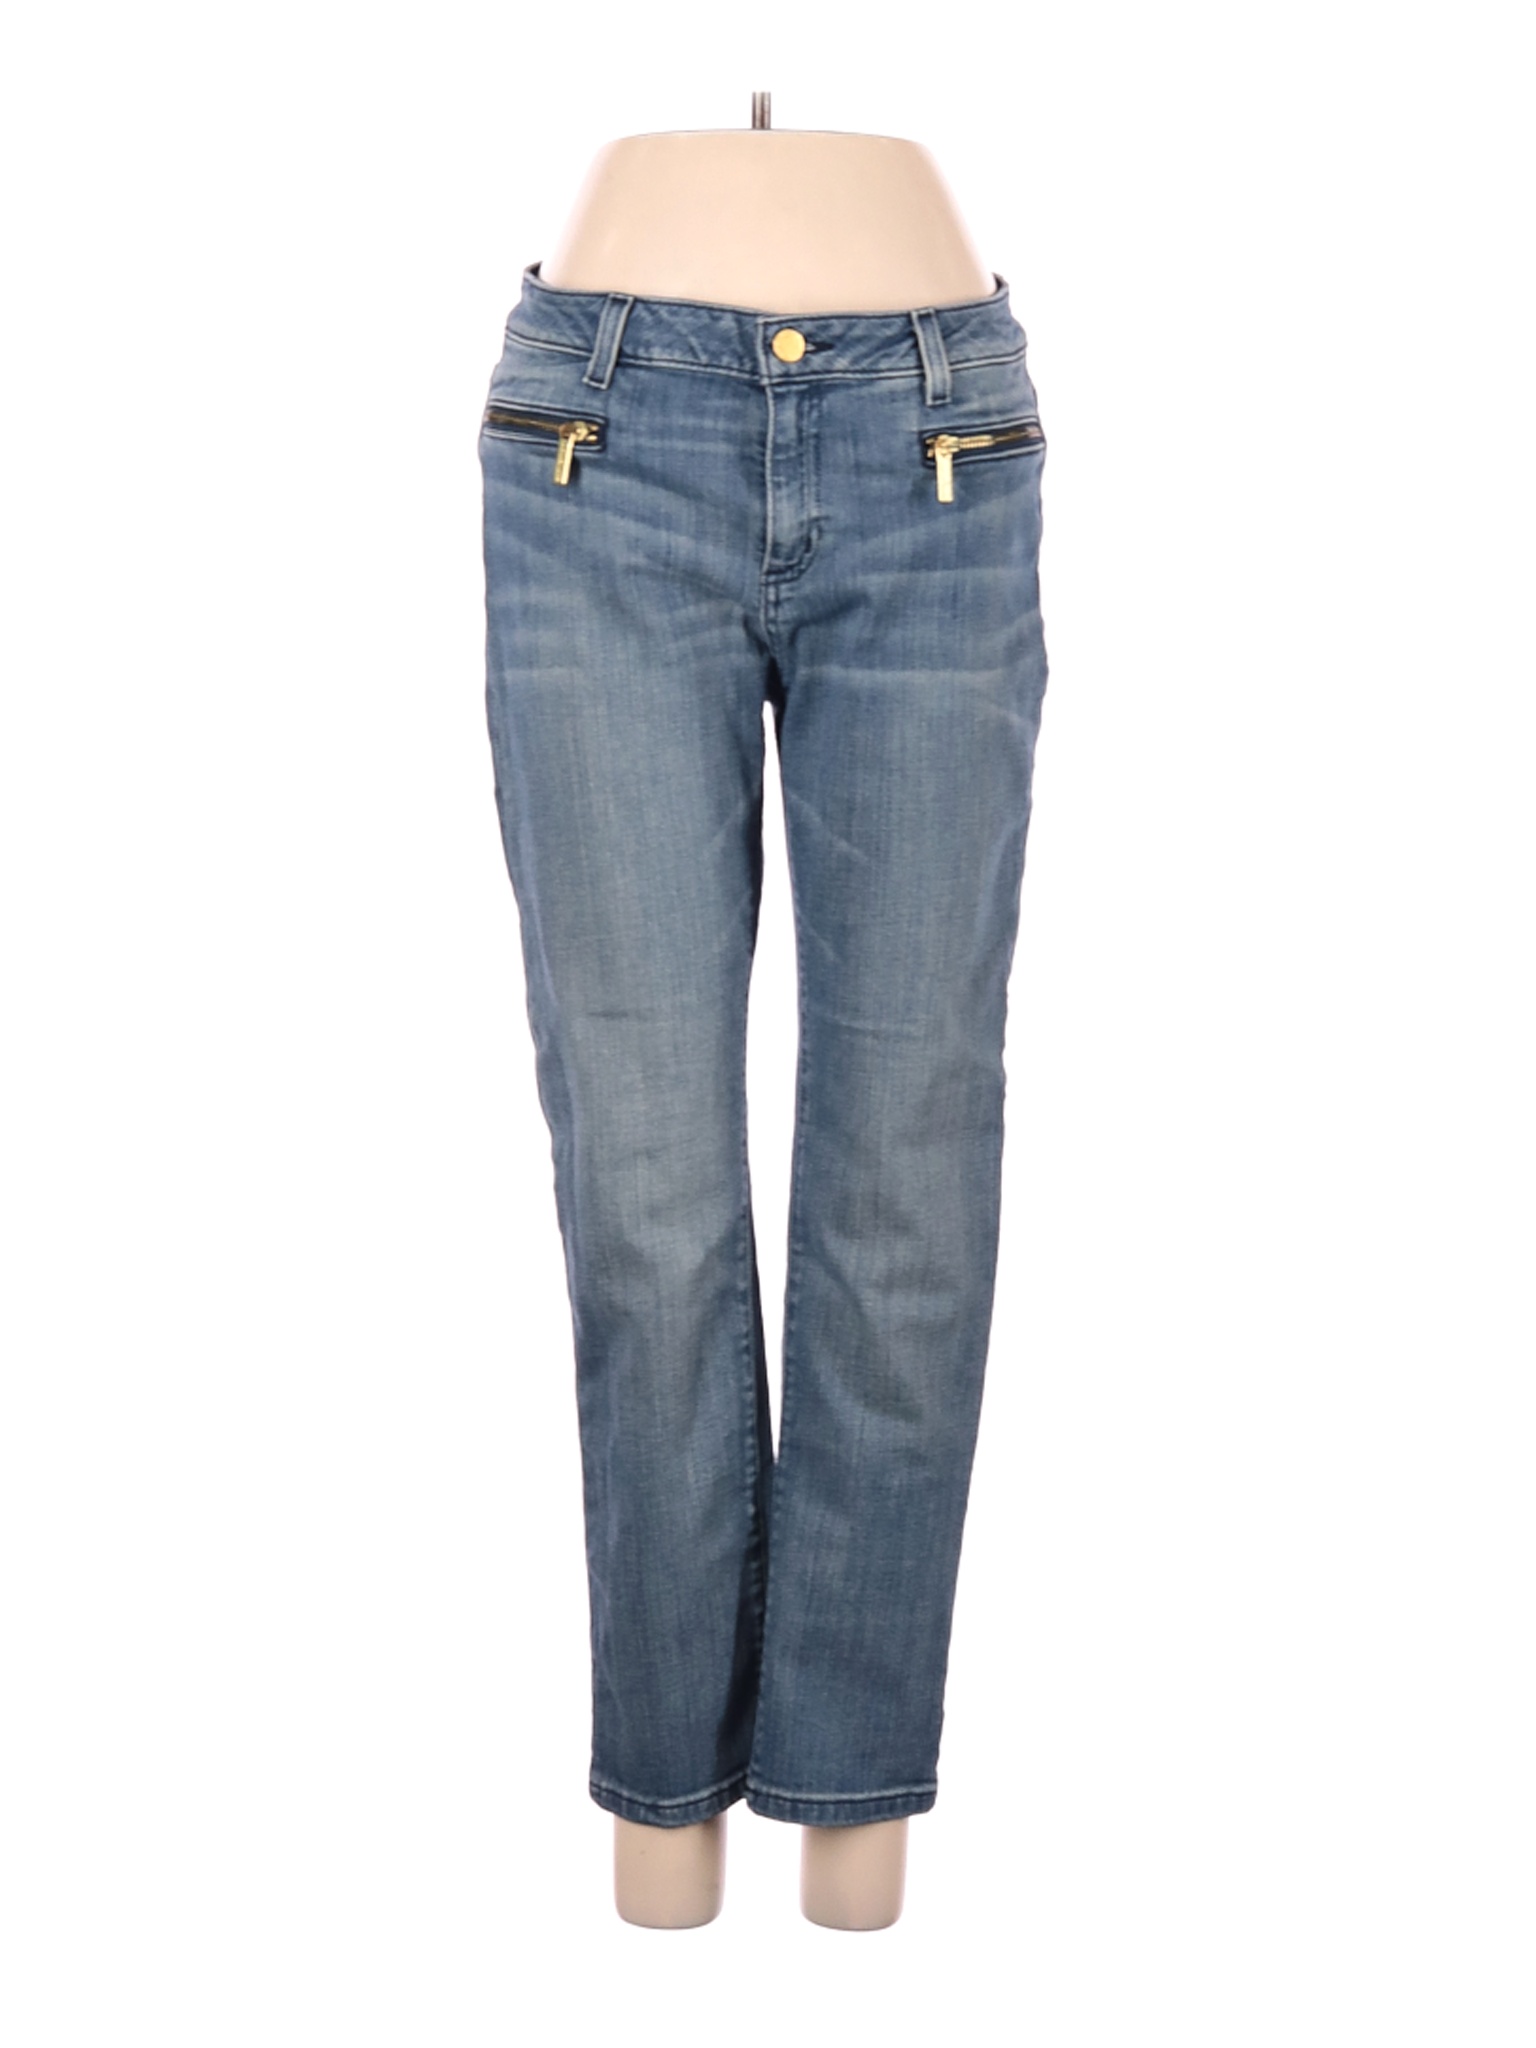 MICHAEL Michael Kors Women Blue Jeans 8 | eBay